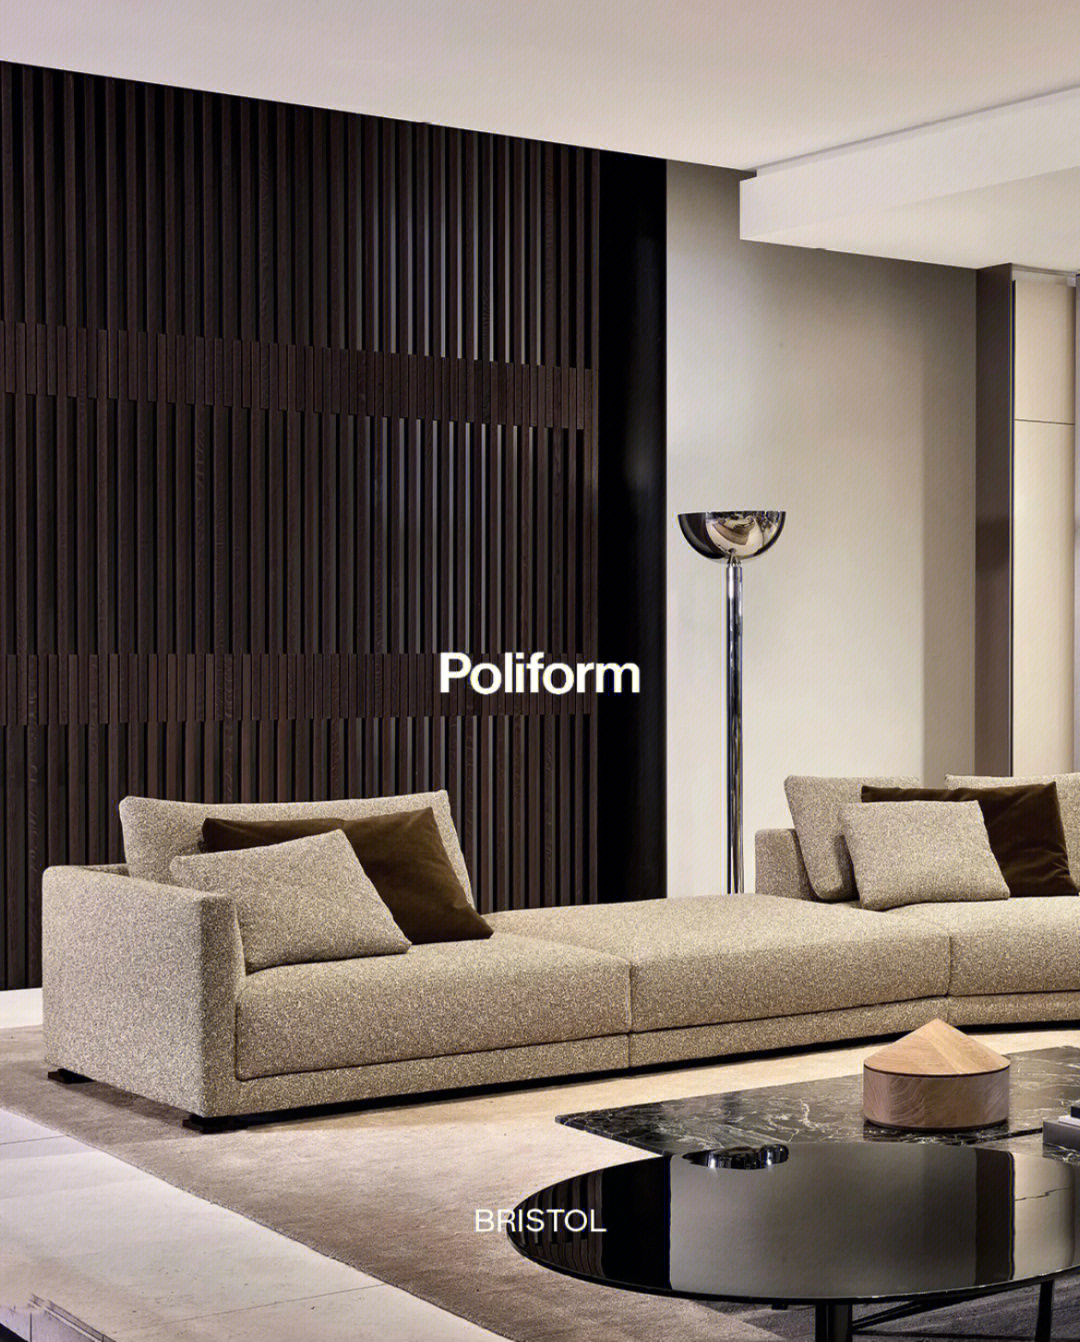 poliform丨bristol沙发重塑升级